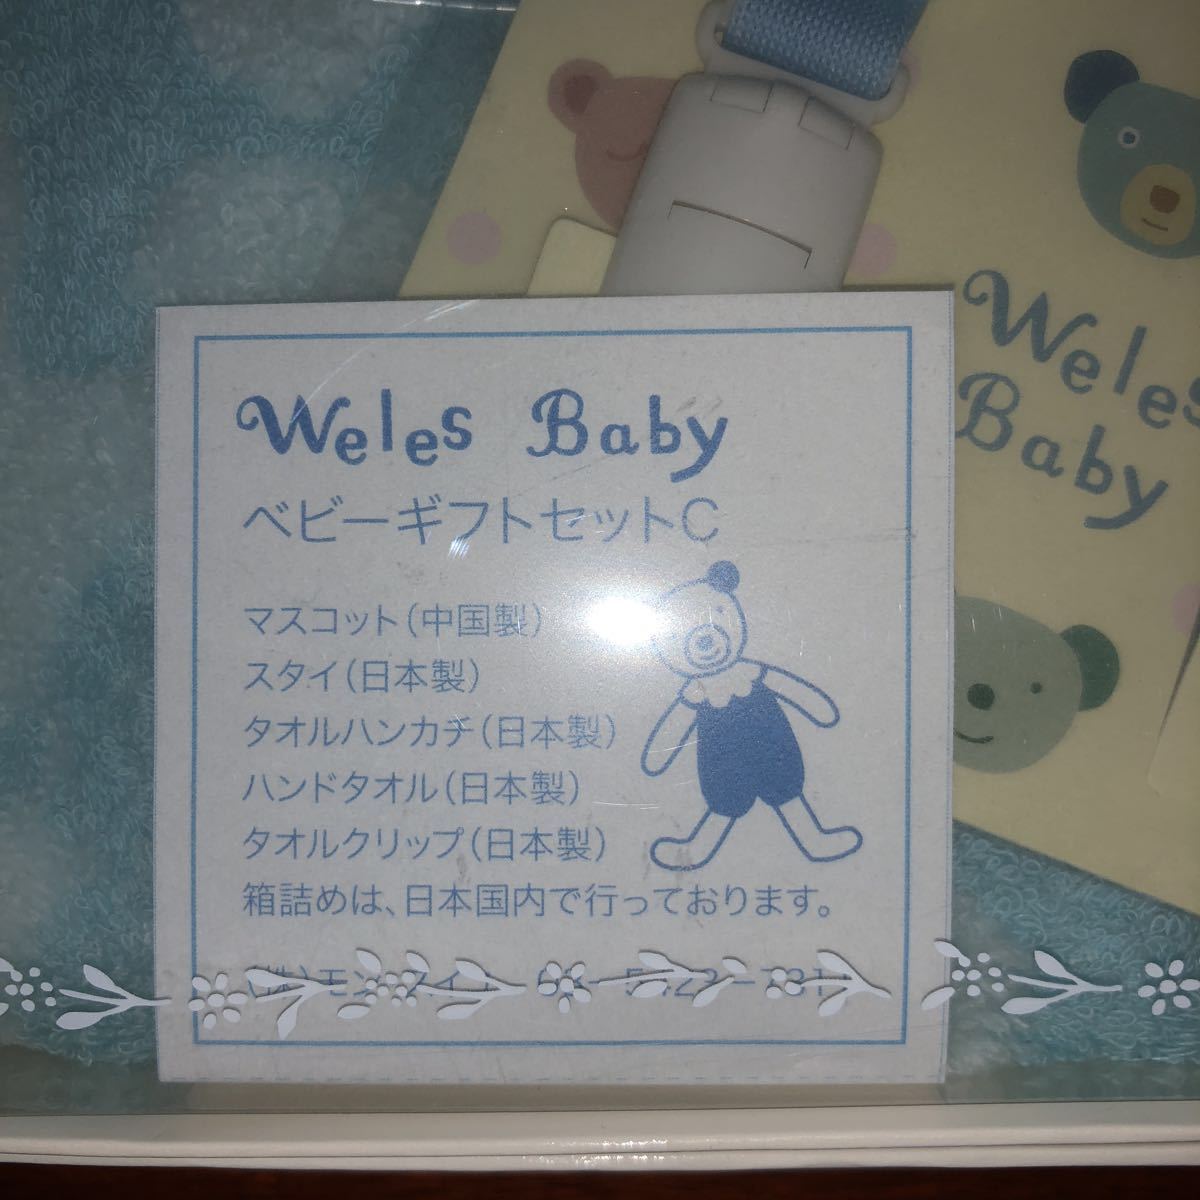 [mon acid yu|MON SEUIL][ weles| way ruz] baby gift set mascot * baby's bib * towel handkerchie * hand towel * towel clip 